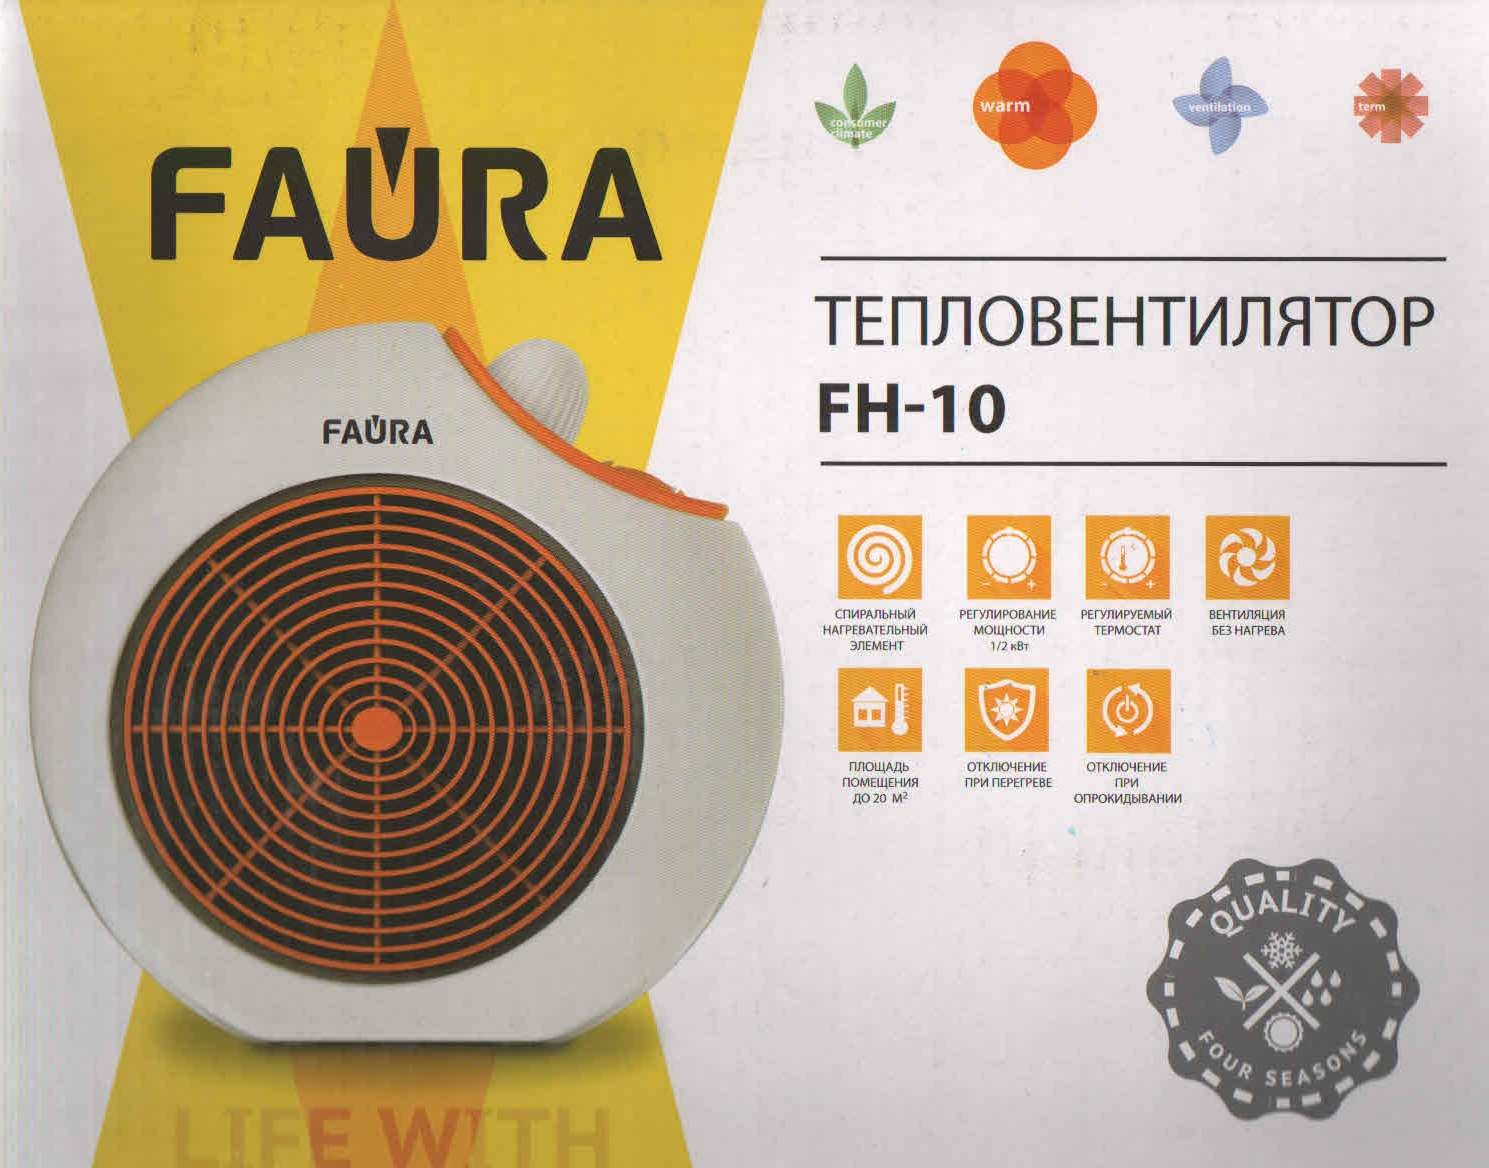 FAURA FH-10 orange